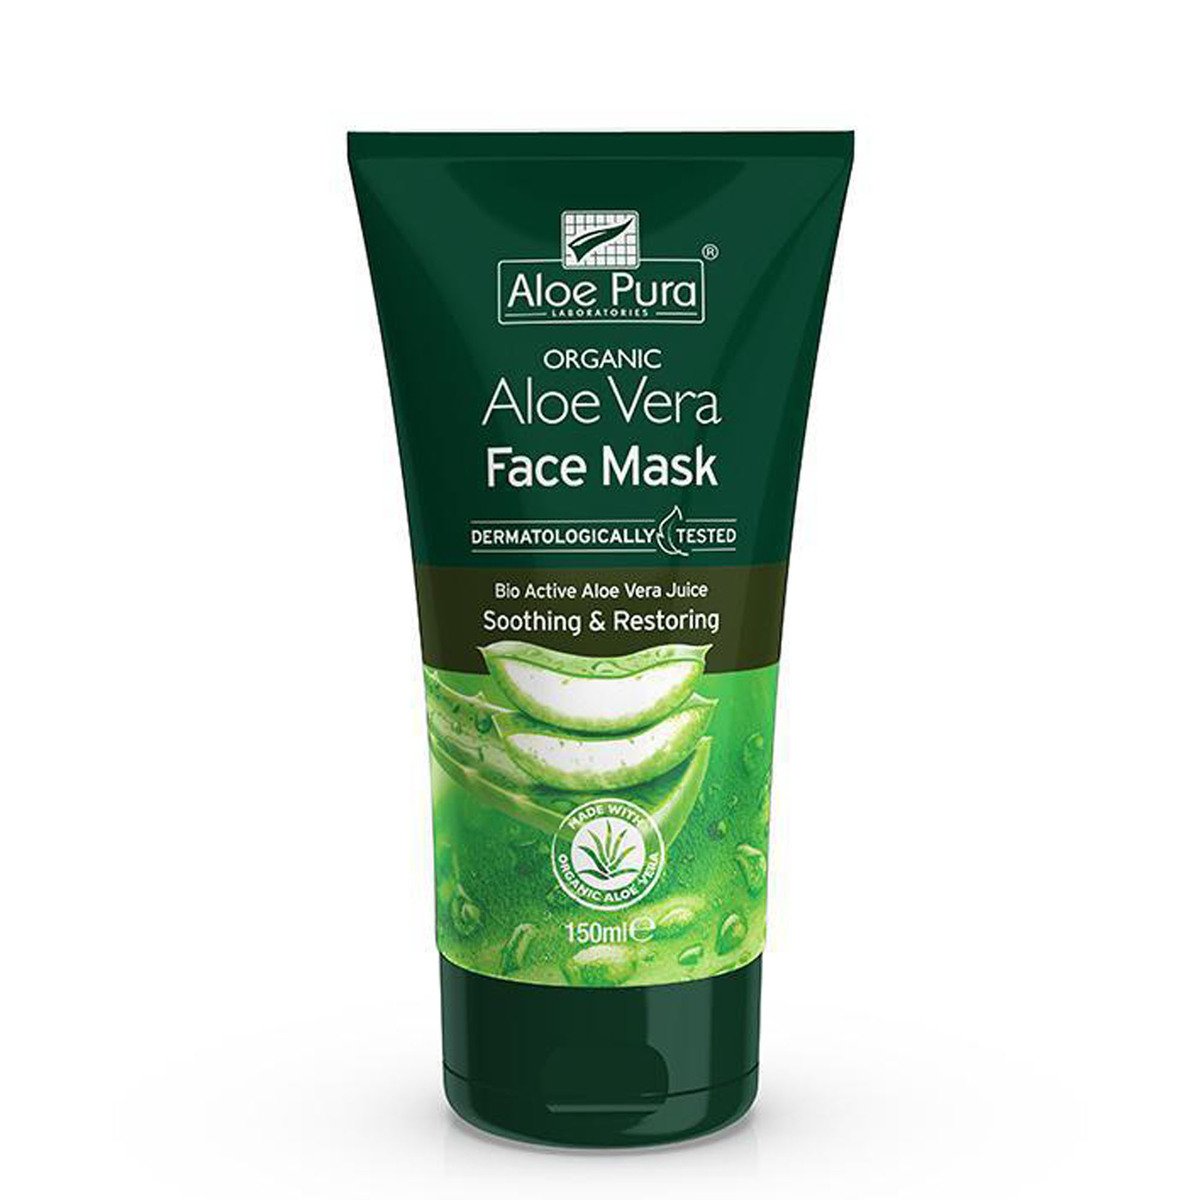 Aloe Pura Organic Aloe Vera Face Mask 150ml